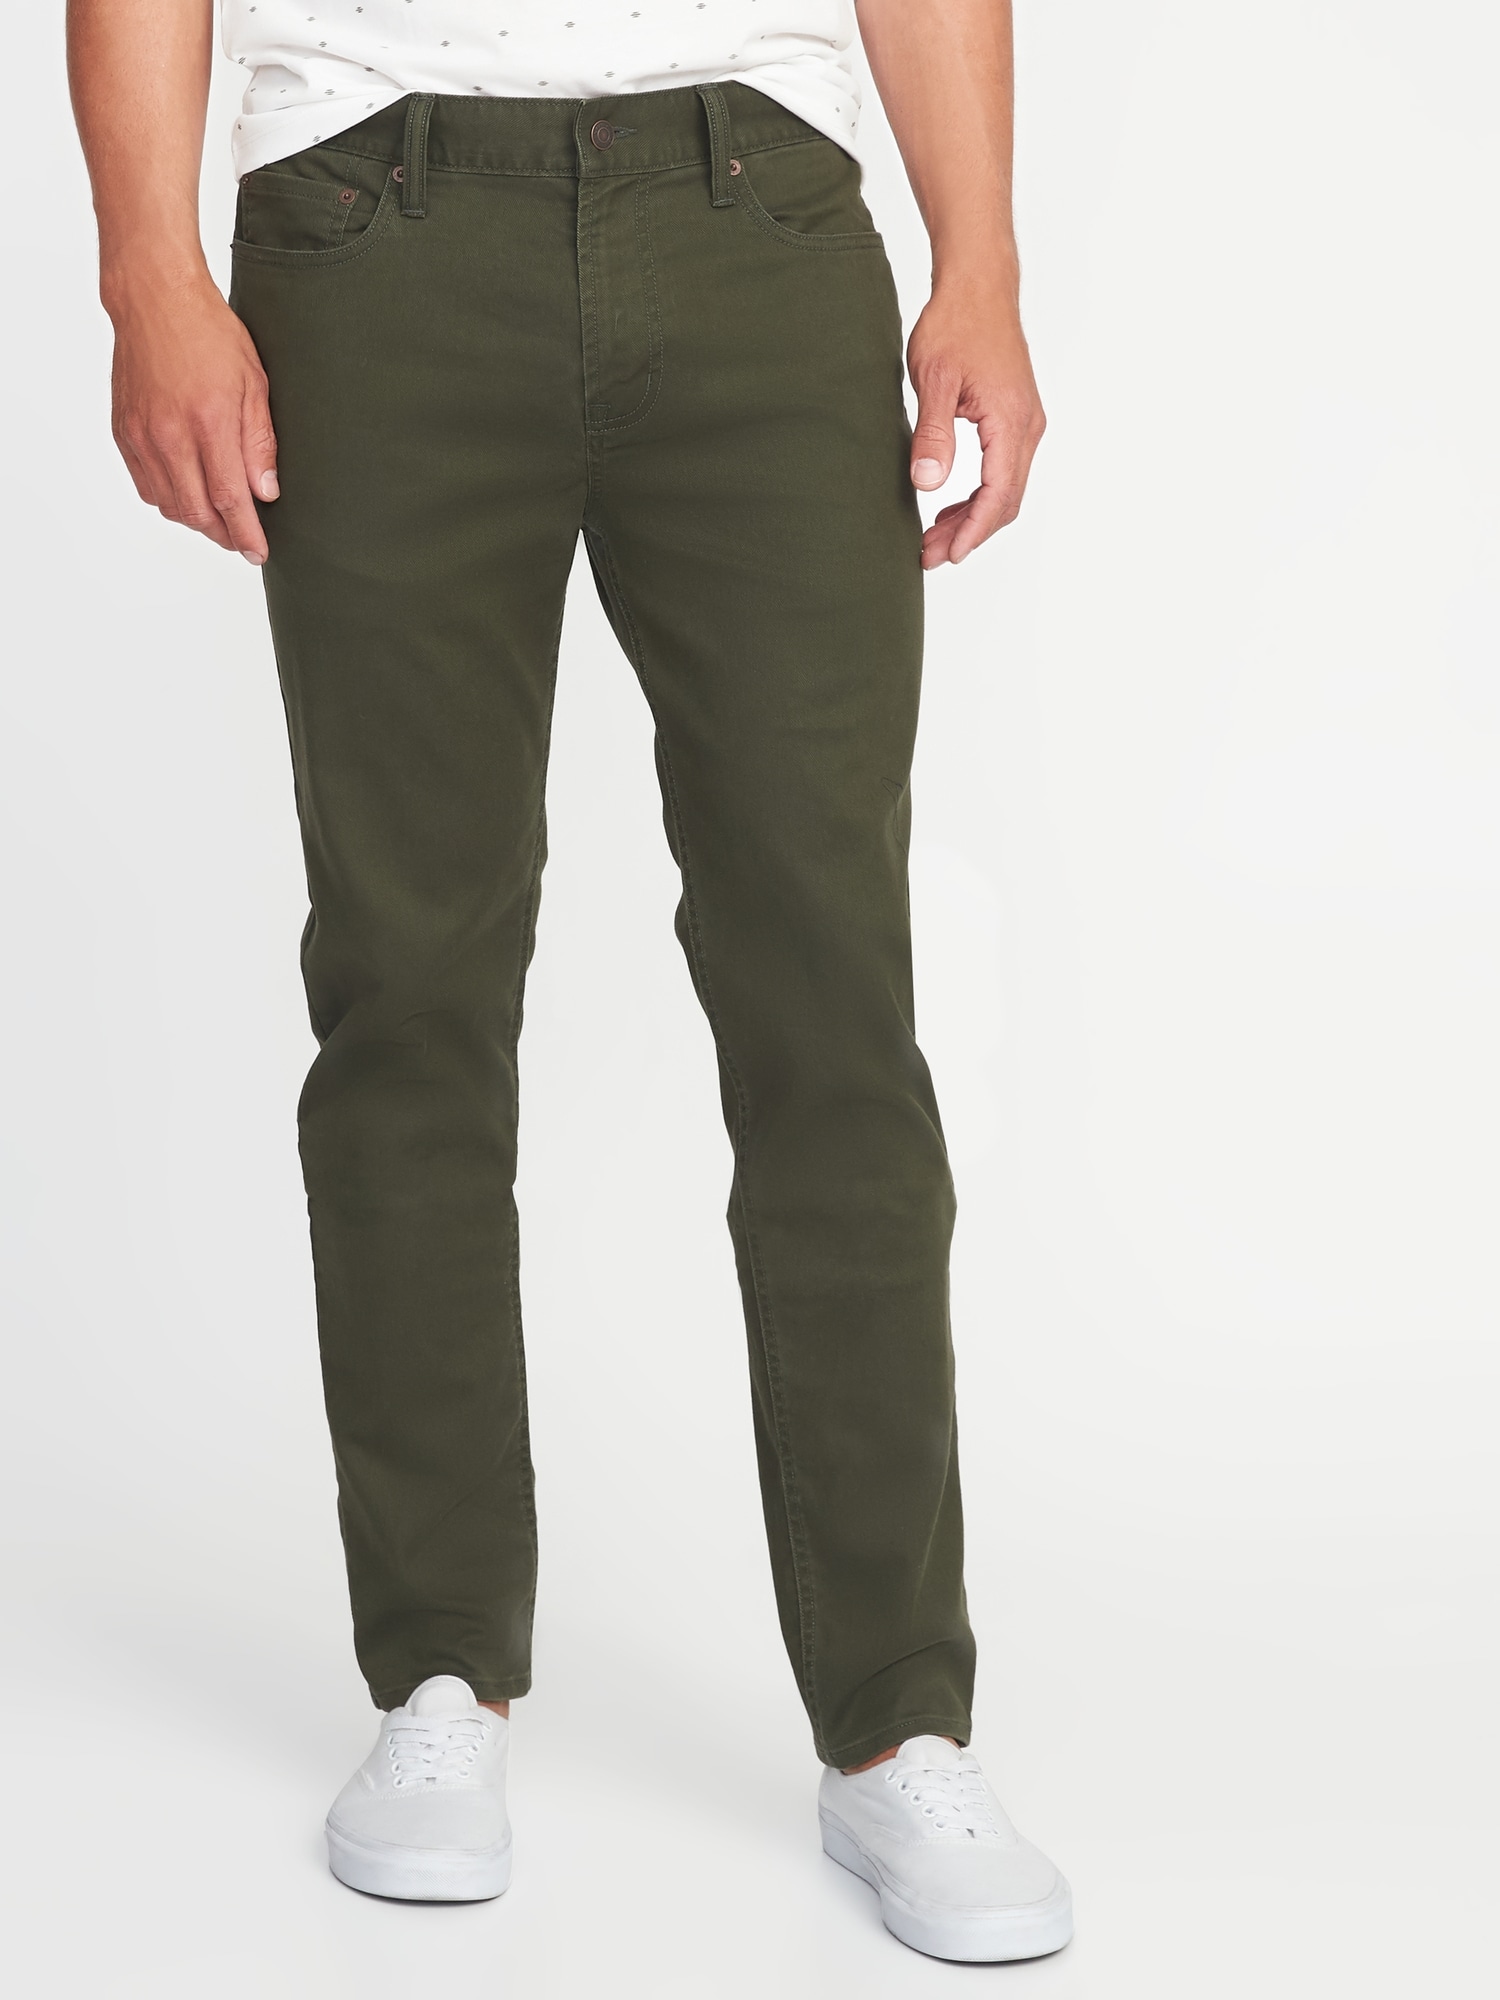 Slim Built-In Flex All-Temp Twill Five-Pocket Pants For Men | Old Navy